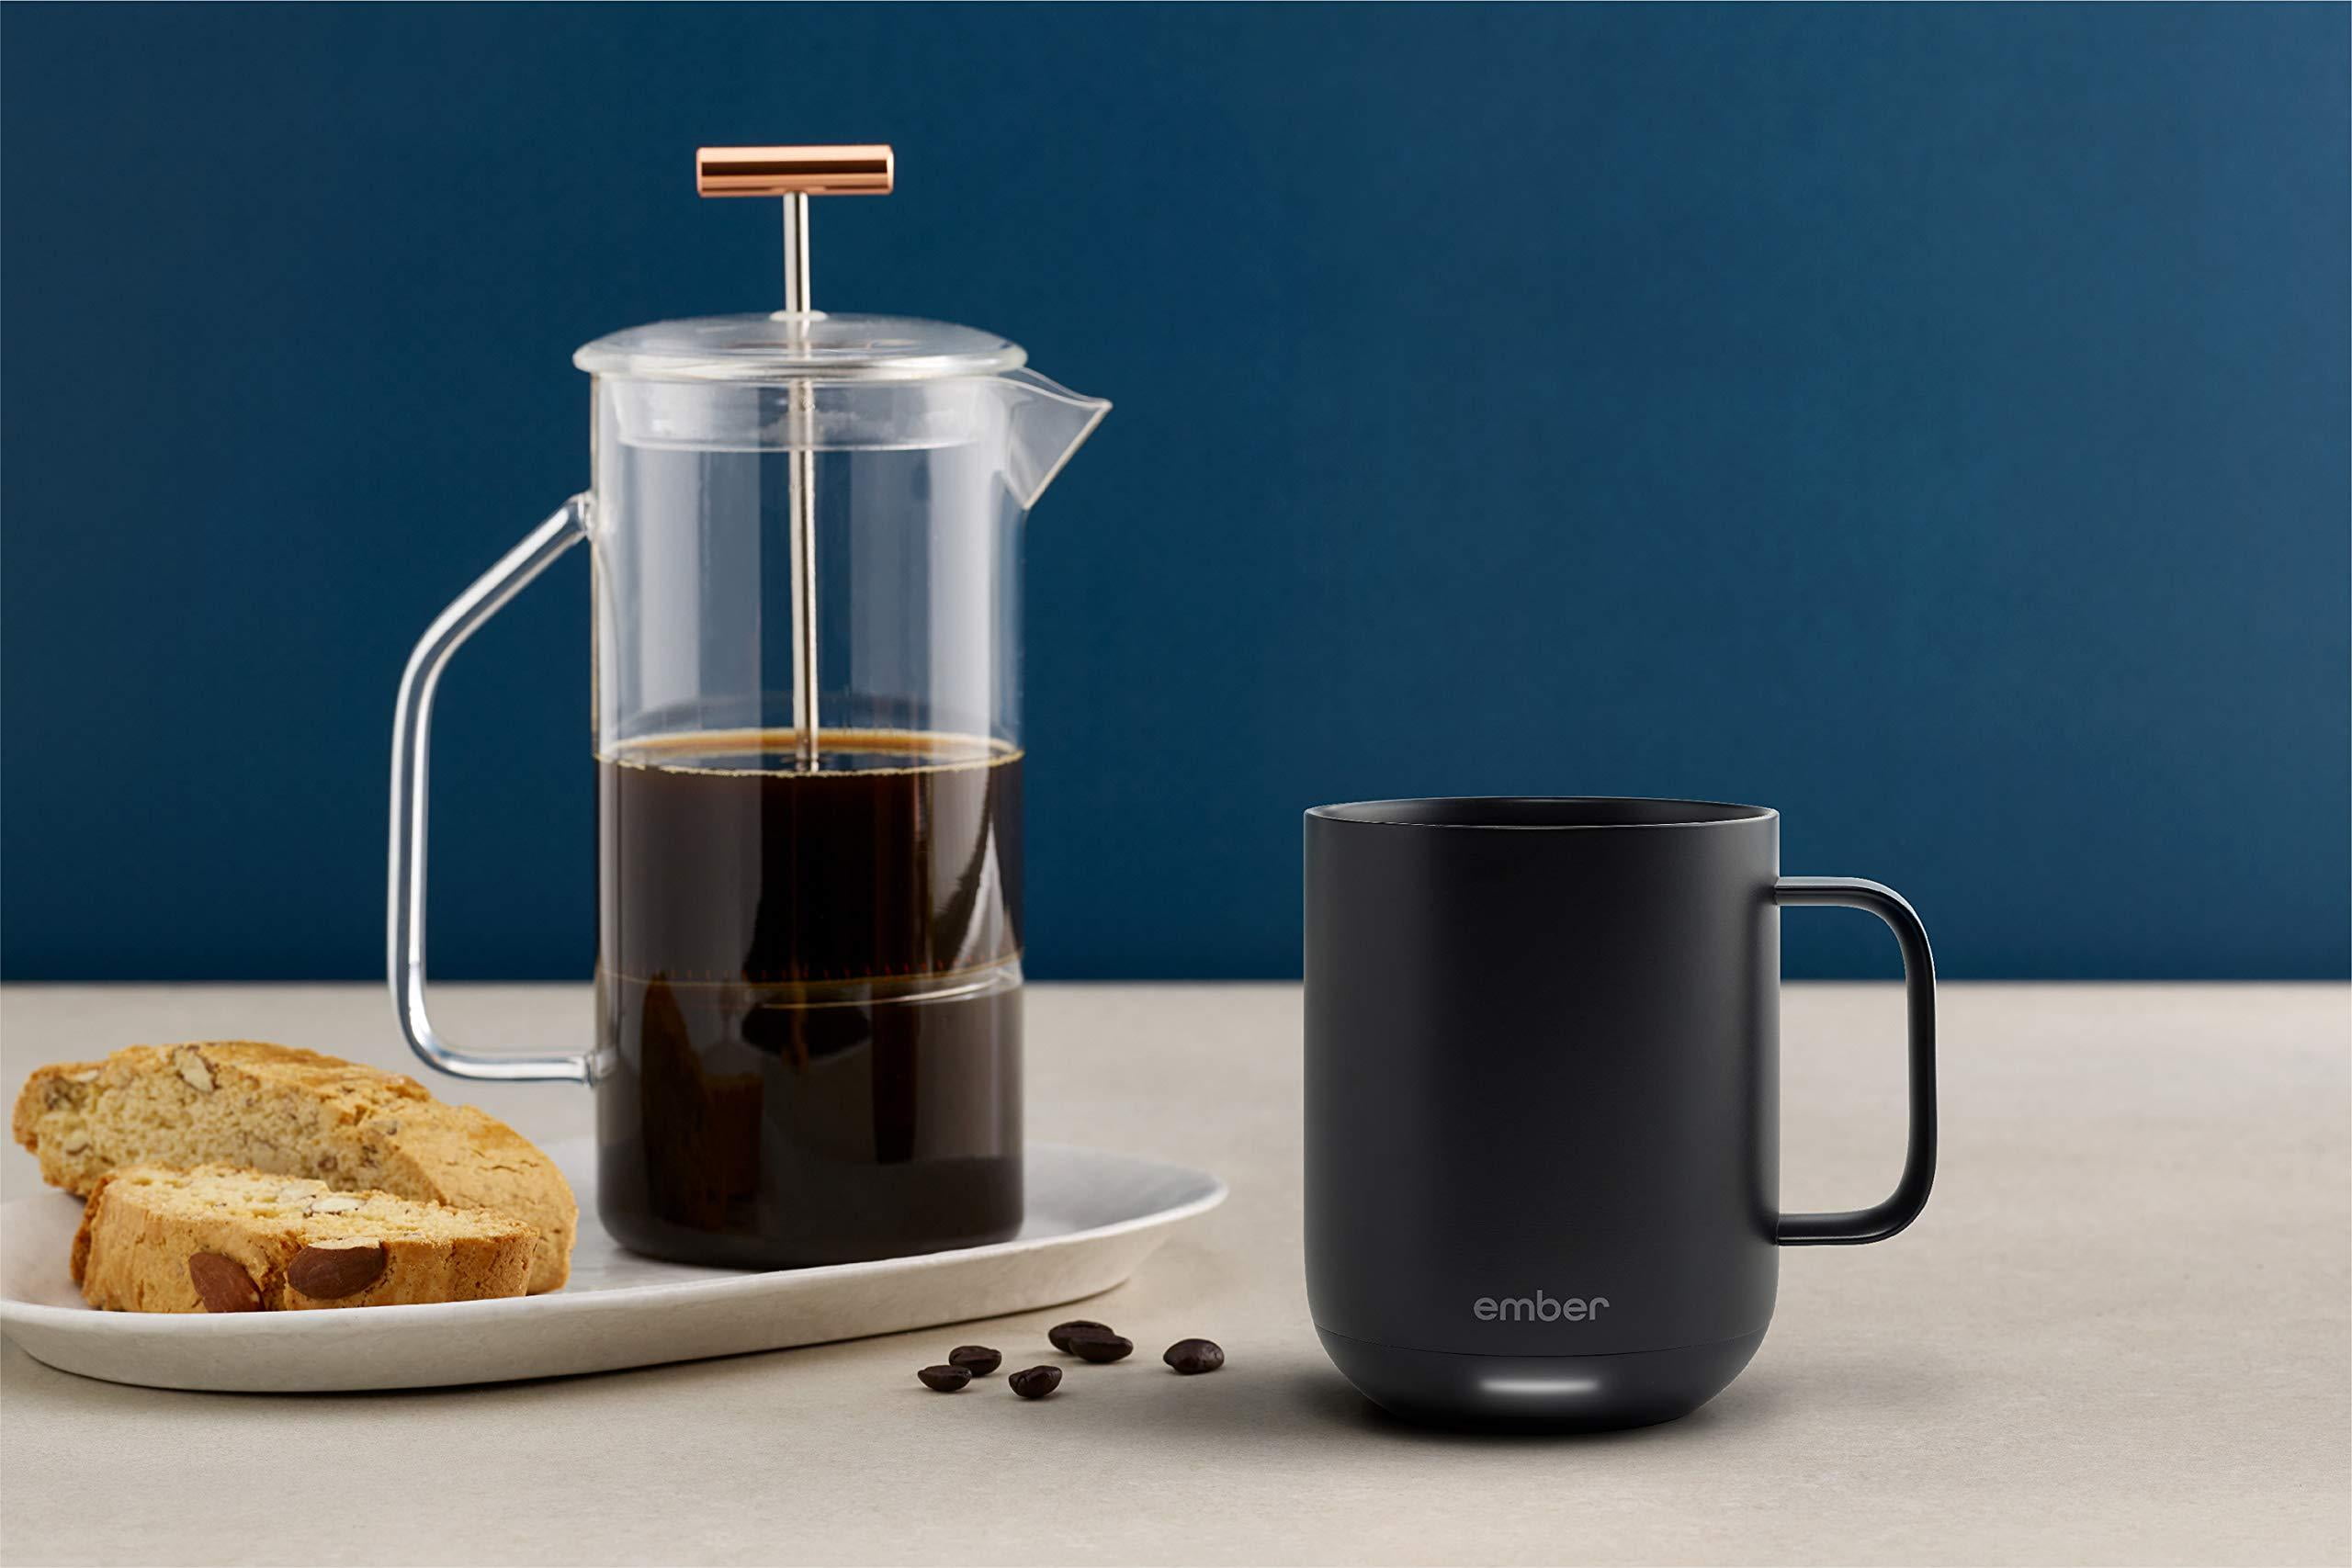  Bshirmay Coffee Mug Lid Compatible with Ember 10 oz Temperature  Control Smart Mug 2 Splash Proof Open/Close Splash-Proof Coffee Cup Sliding  Cover (Ember Mug 10oz Lid Black*1): Home & Kitchen